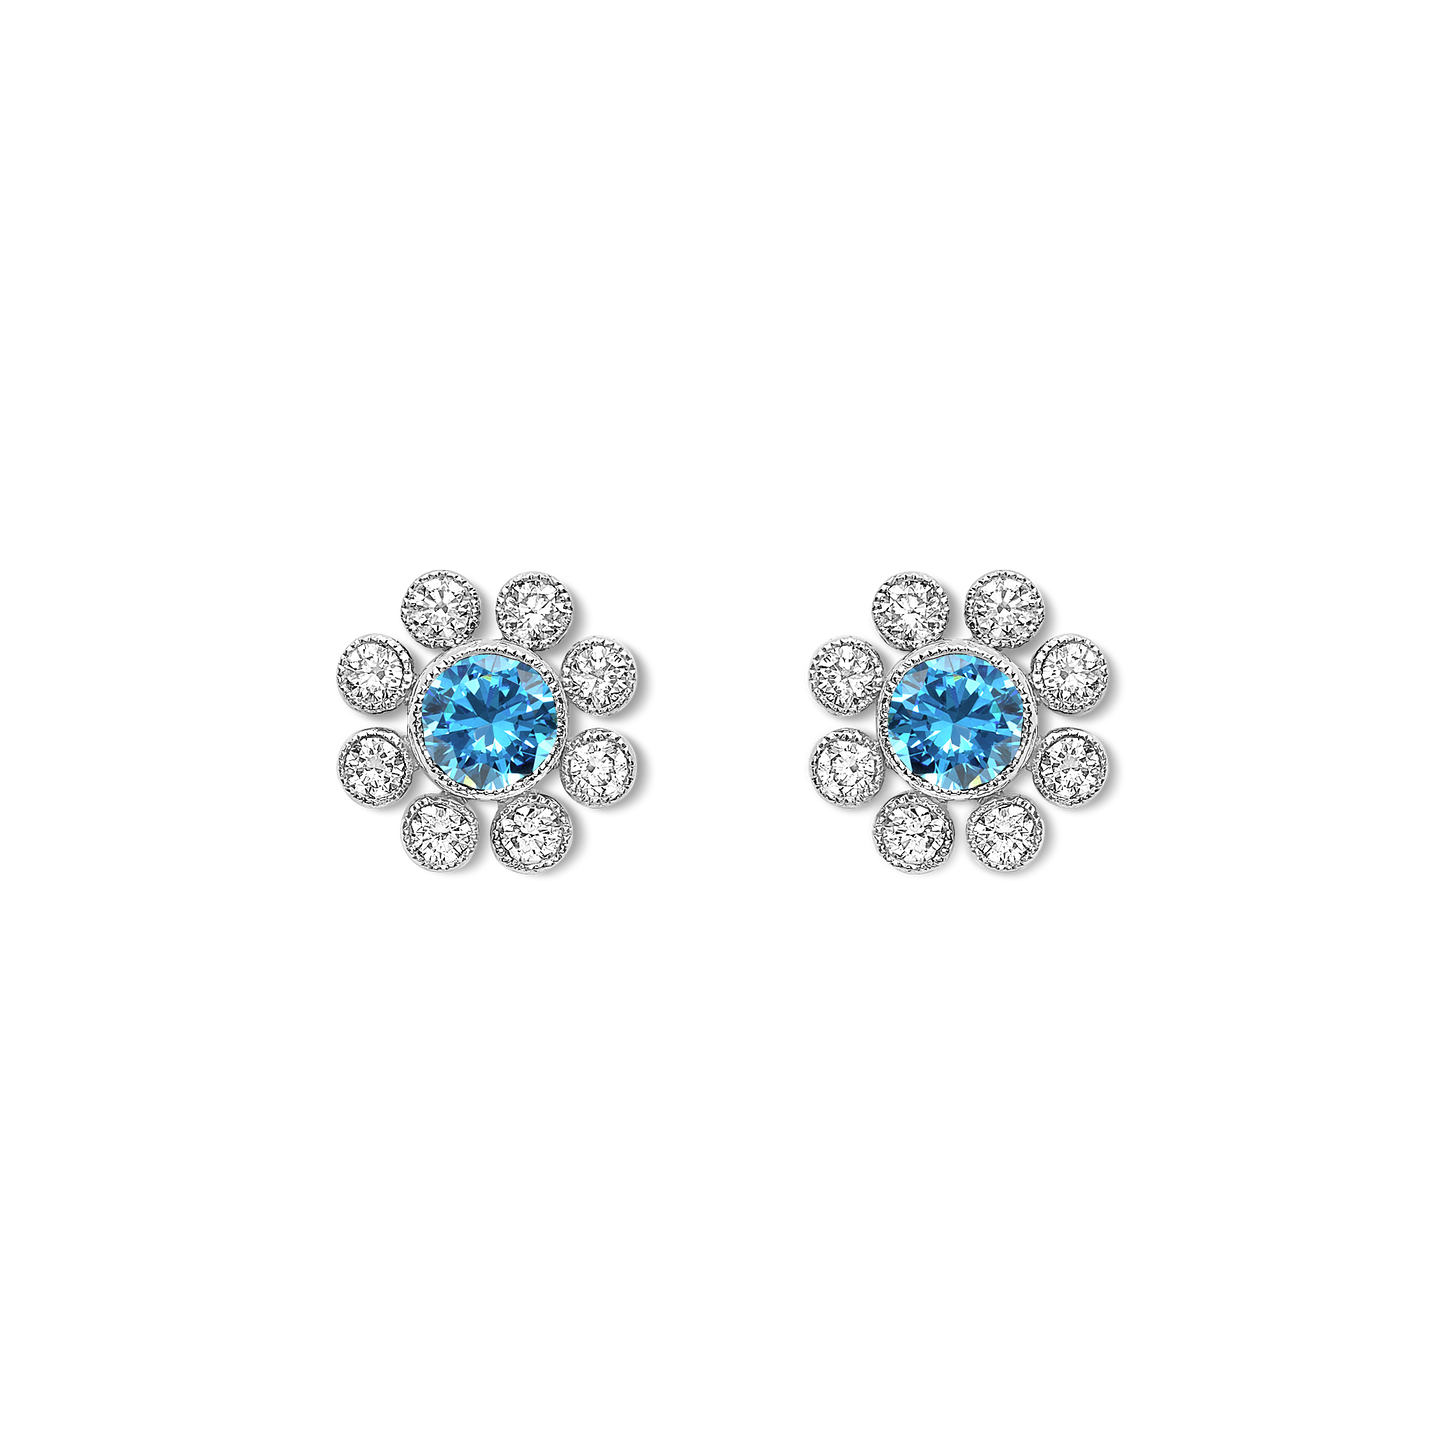 Small Adrienne aquamarine and diamond earrings